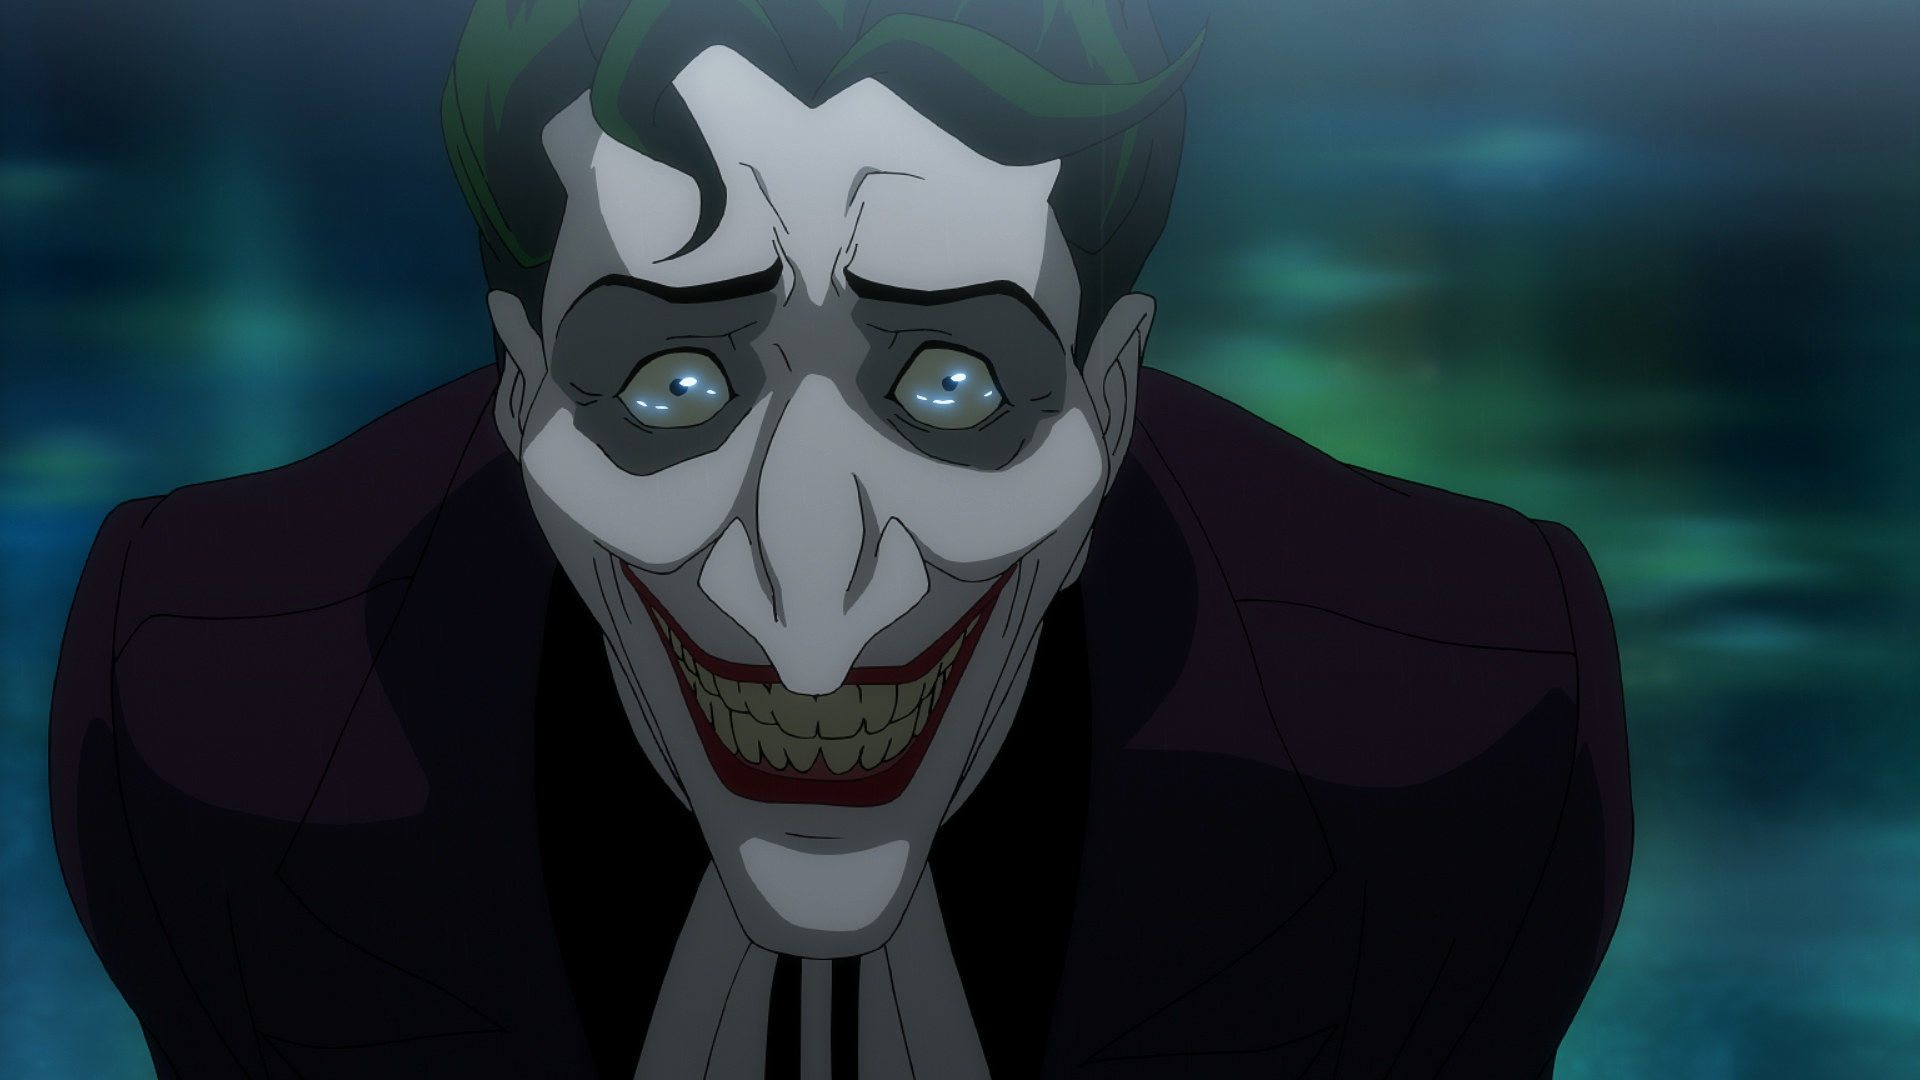 the Joker smiling with sad eyes